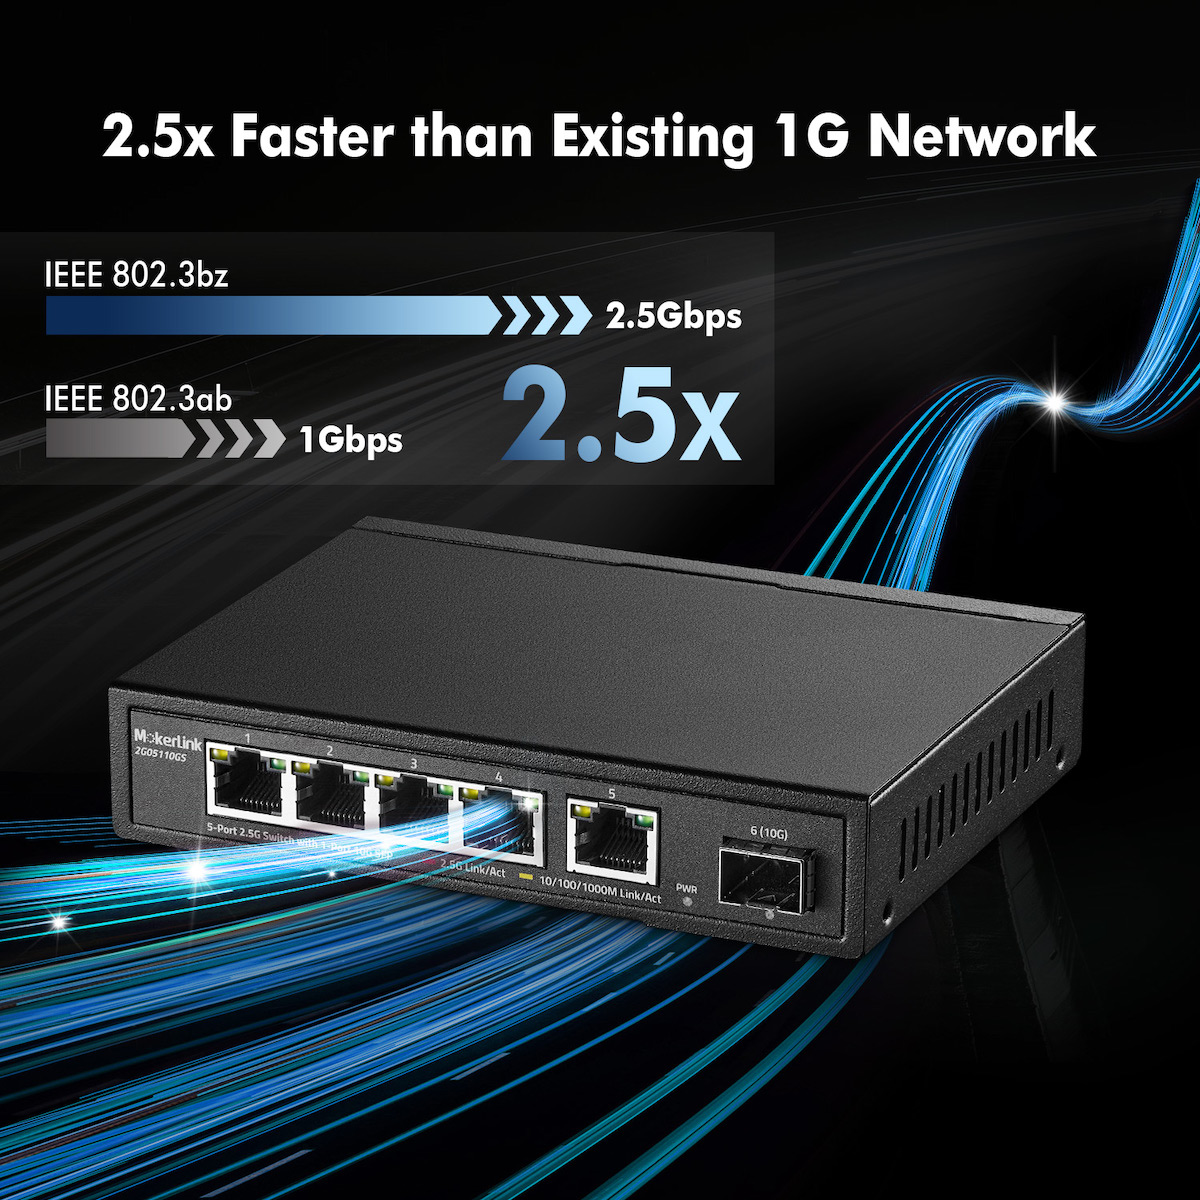 LGB5052A, Managed Gigabit Ethernet Switch with 10GbE uplinks - Black Box